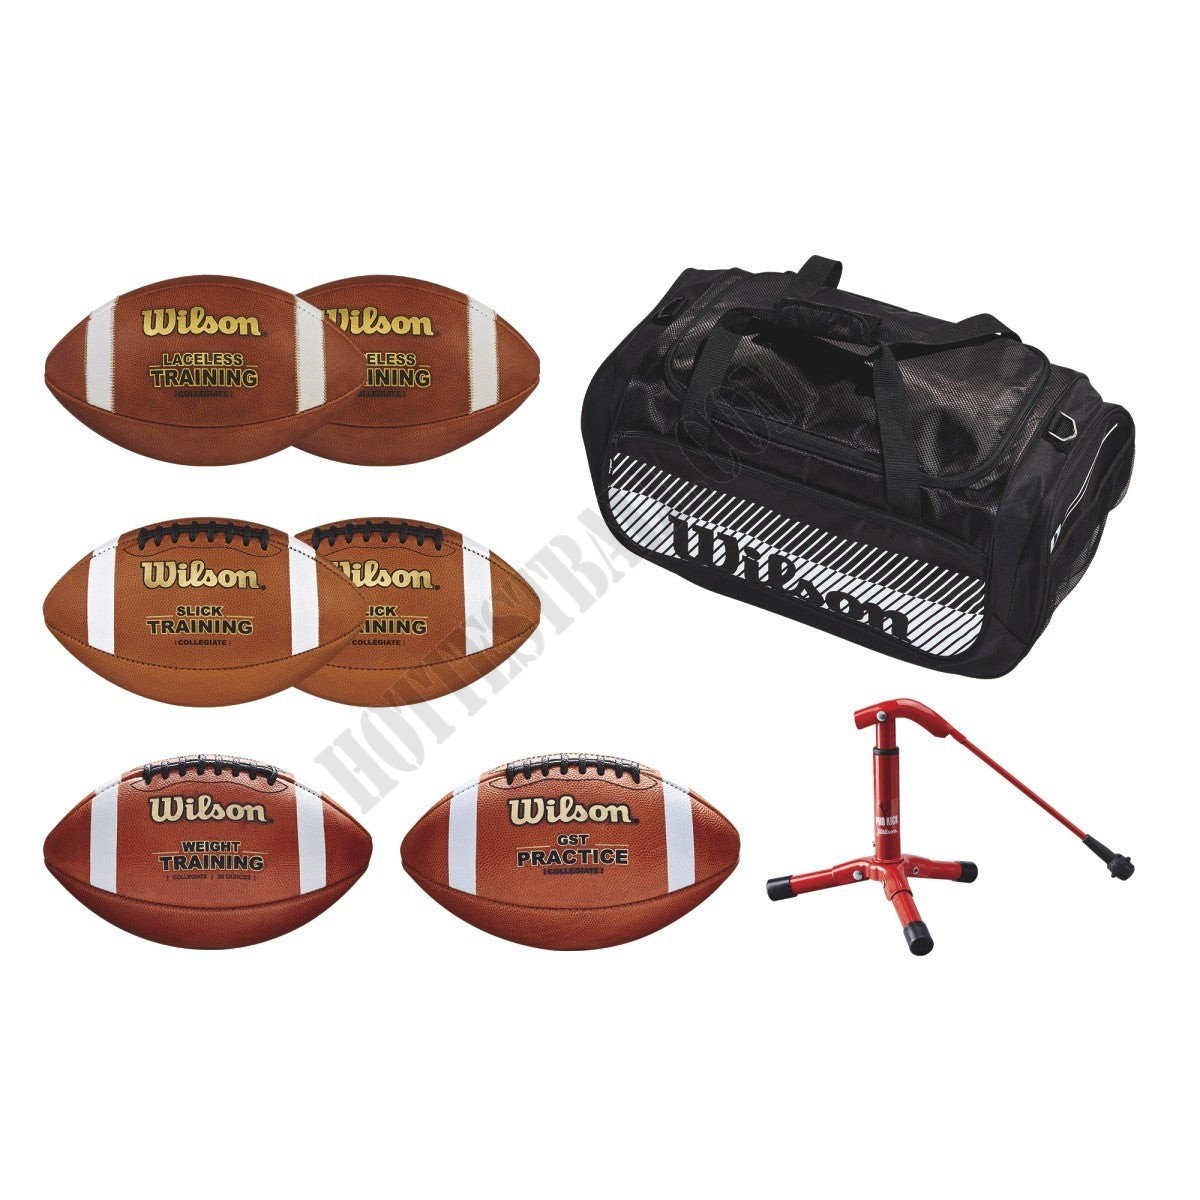 Football Training Camp Kit - Wilson Discount Store - -0